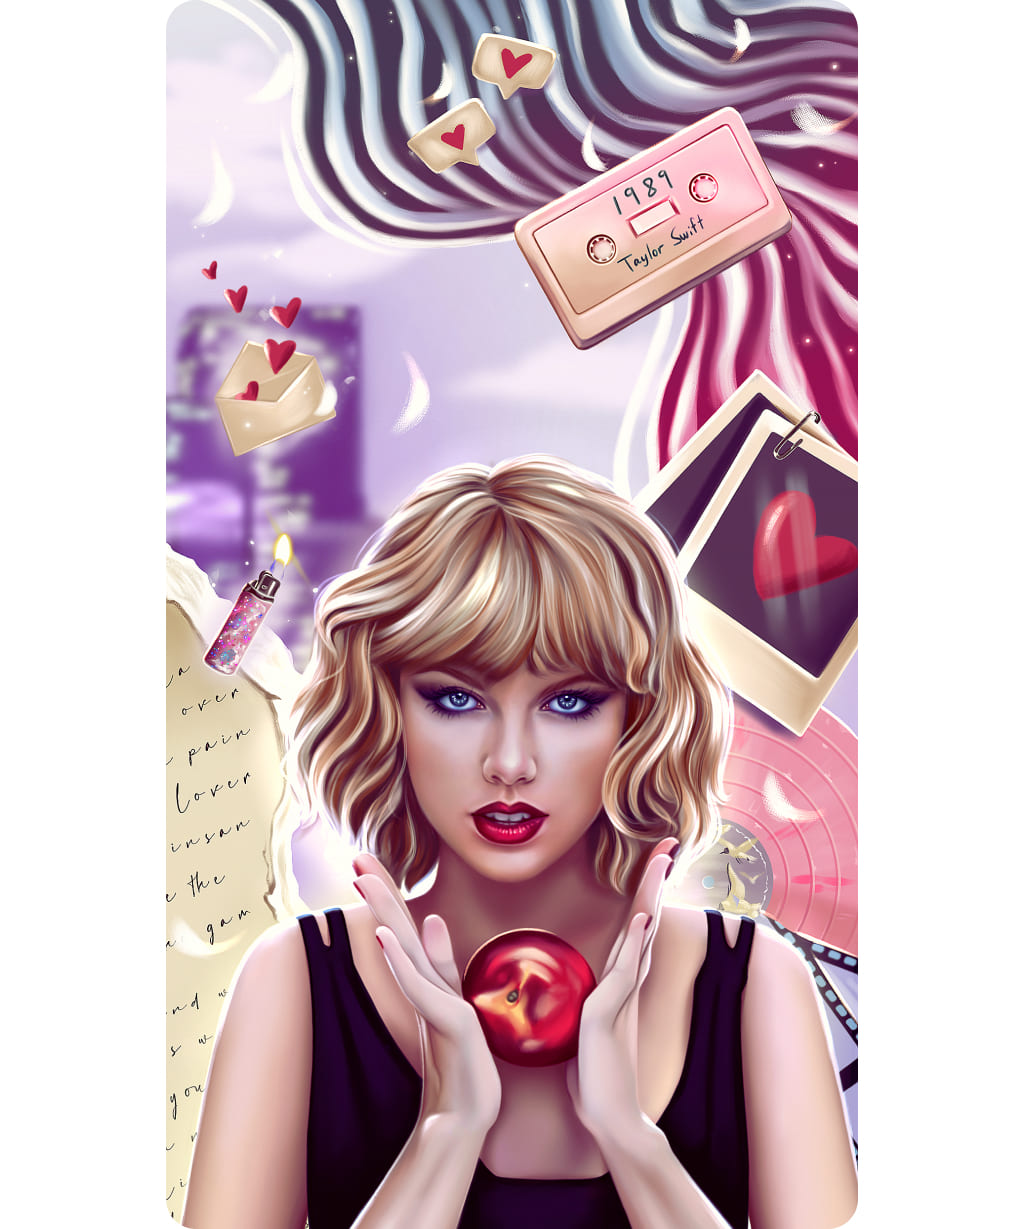 Taylor Swift 1989 (Original) Free Illustration Wallpaper